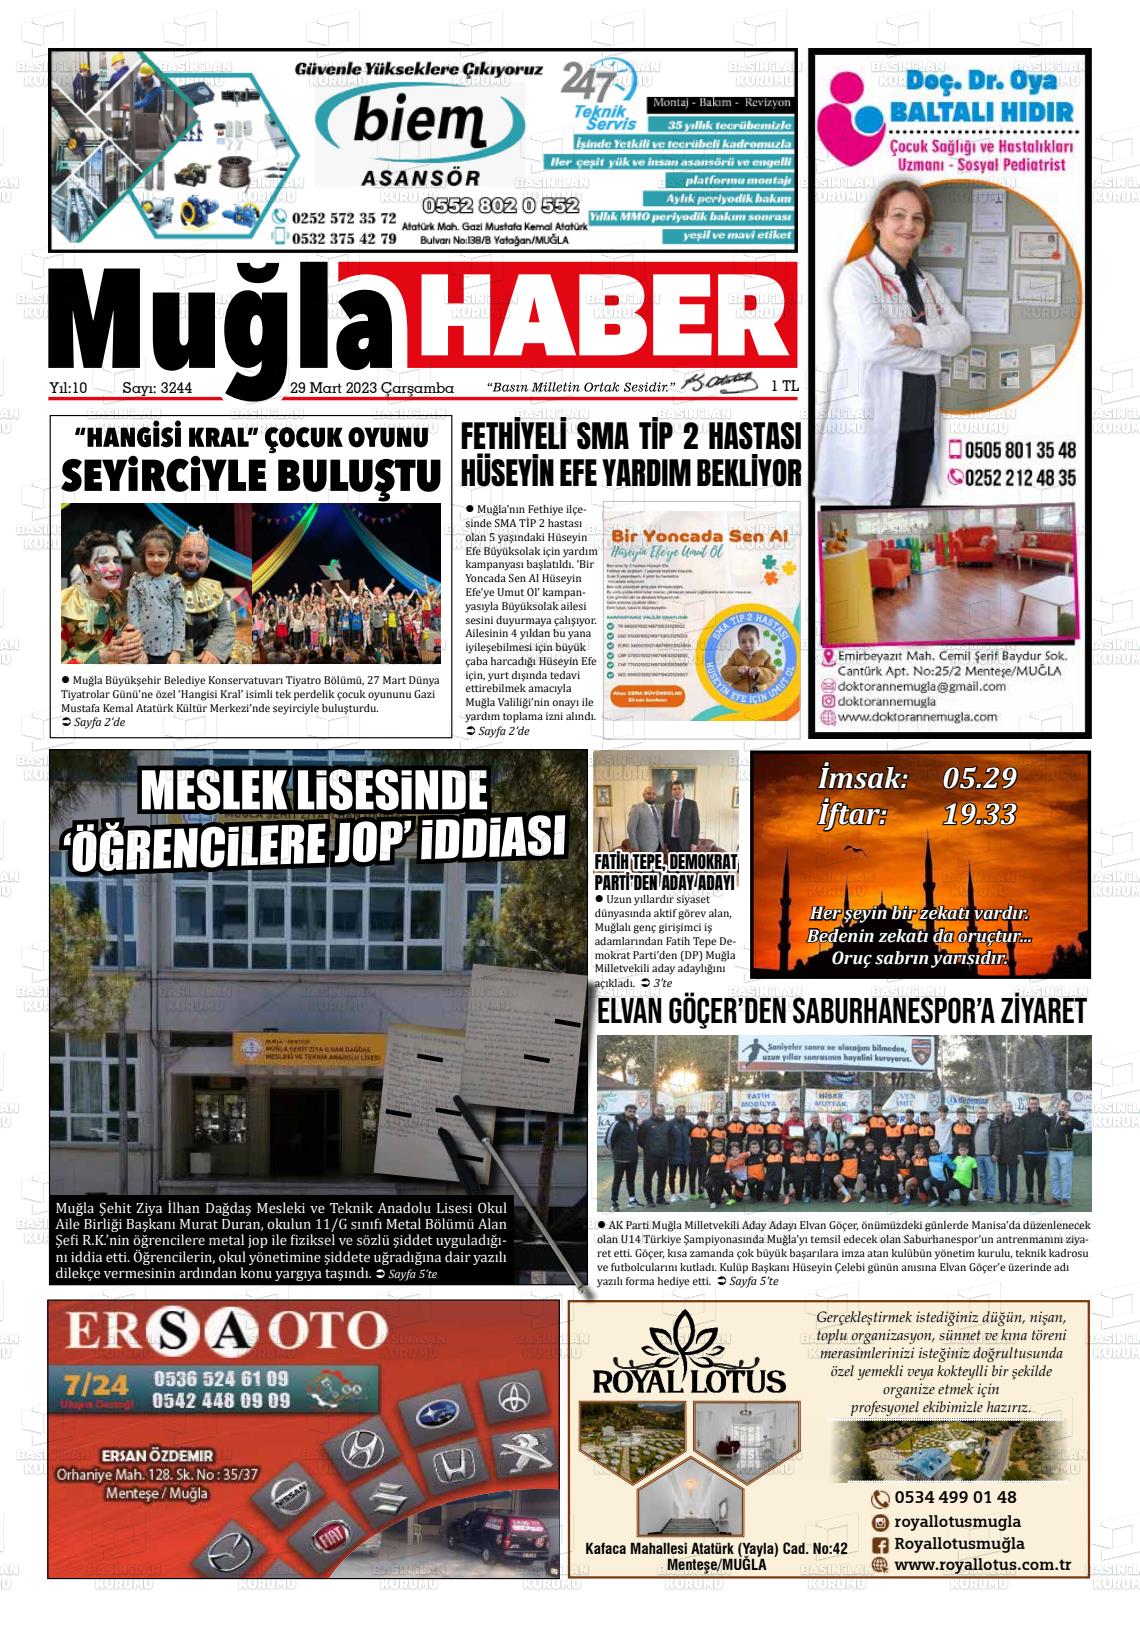 29 Mart 2023 Muğla Haber Gazete Manşeti